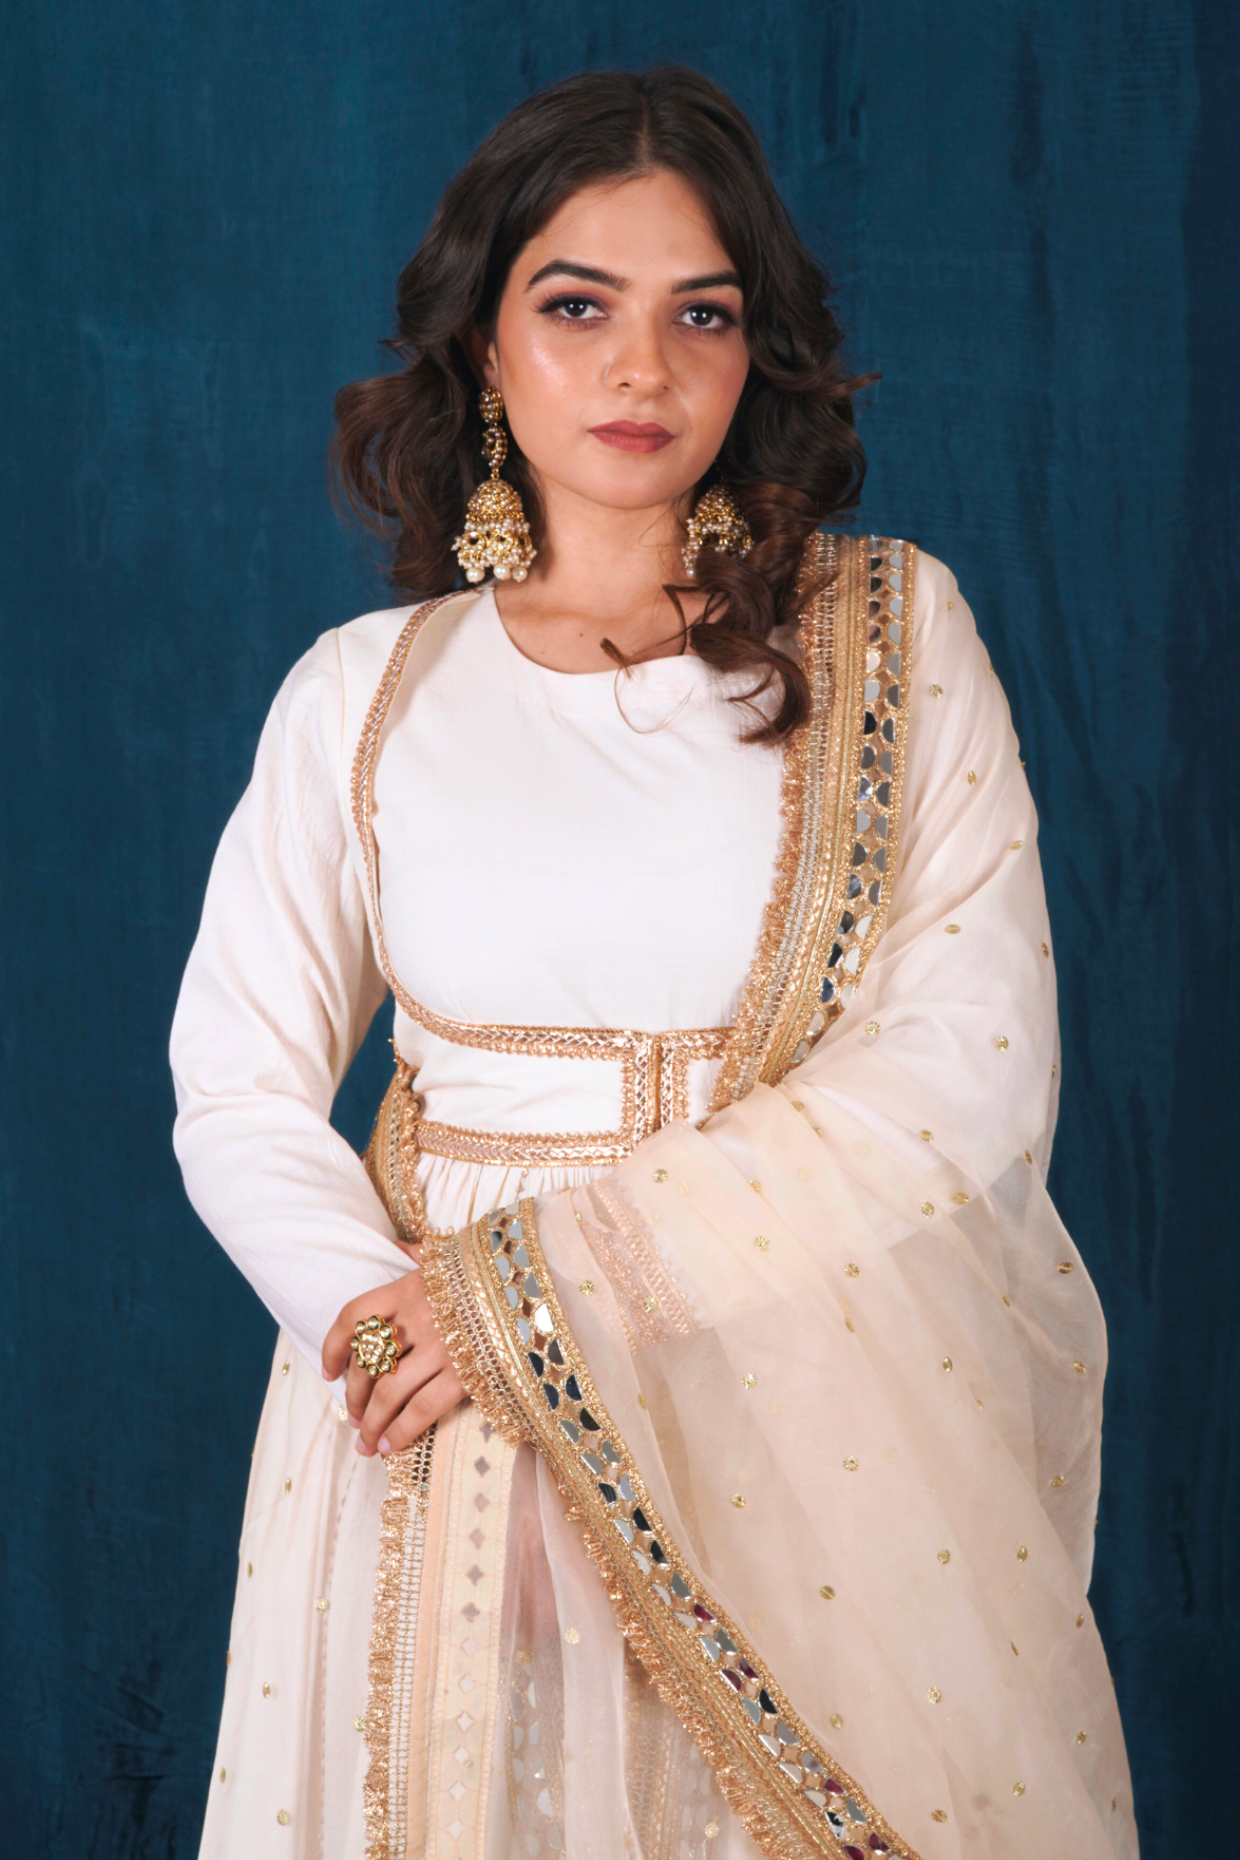 Off-White and Gold Opada Silk Anarkali Set with Heavy Dupatta